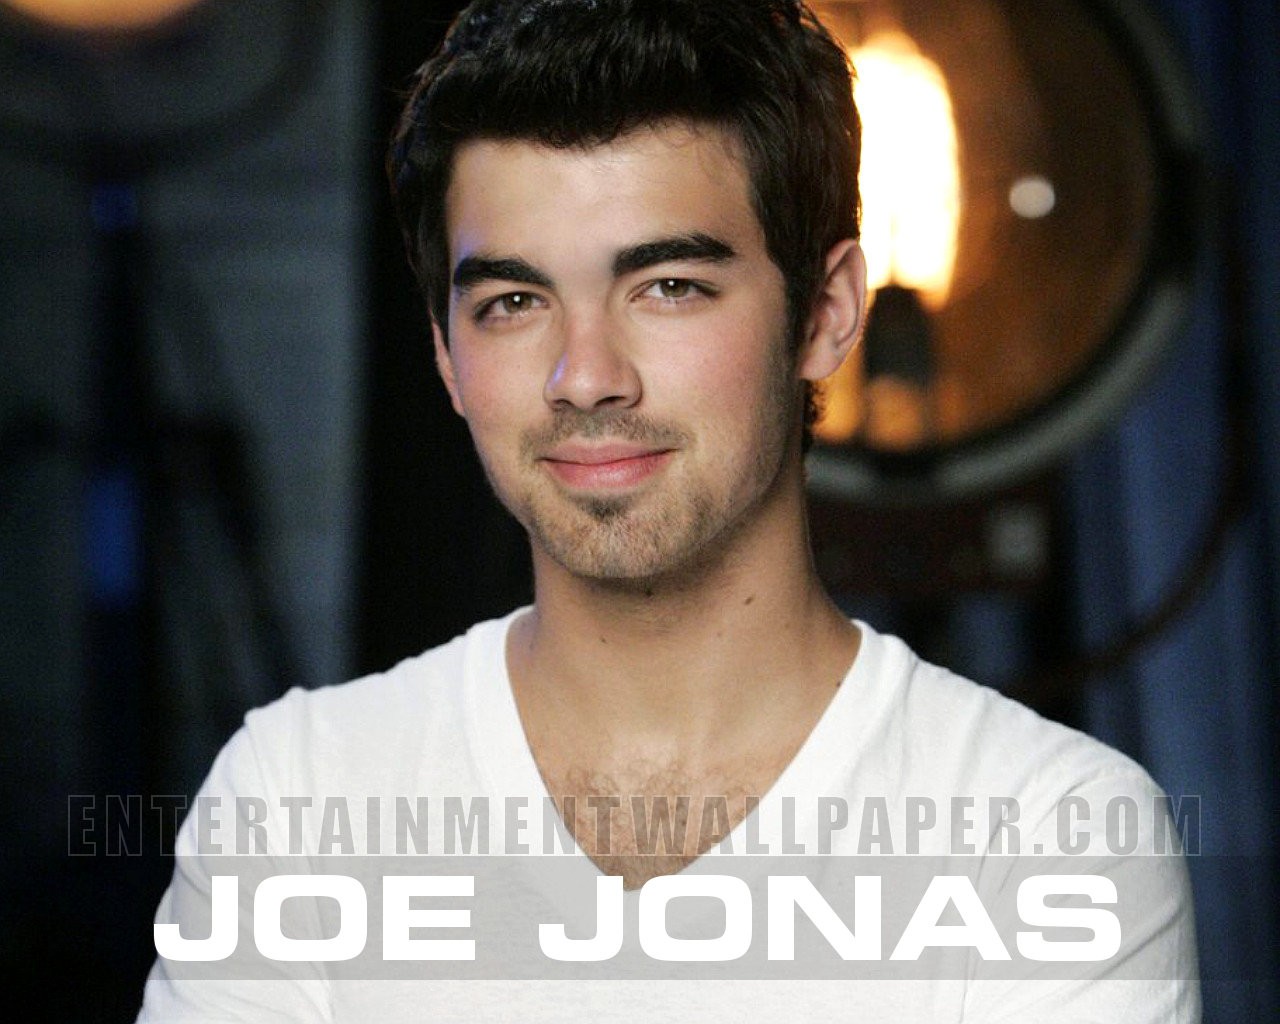 Joe Jonas Image HD Wallpaper And Background